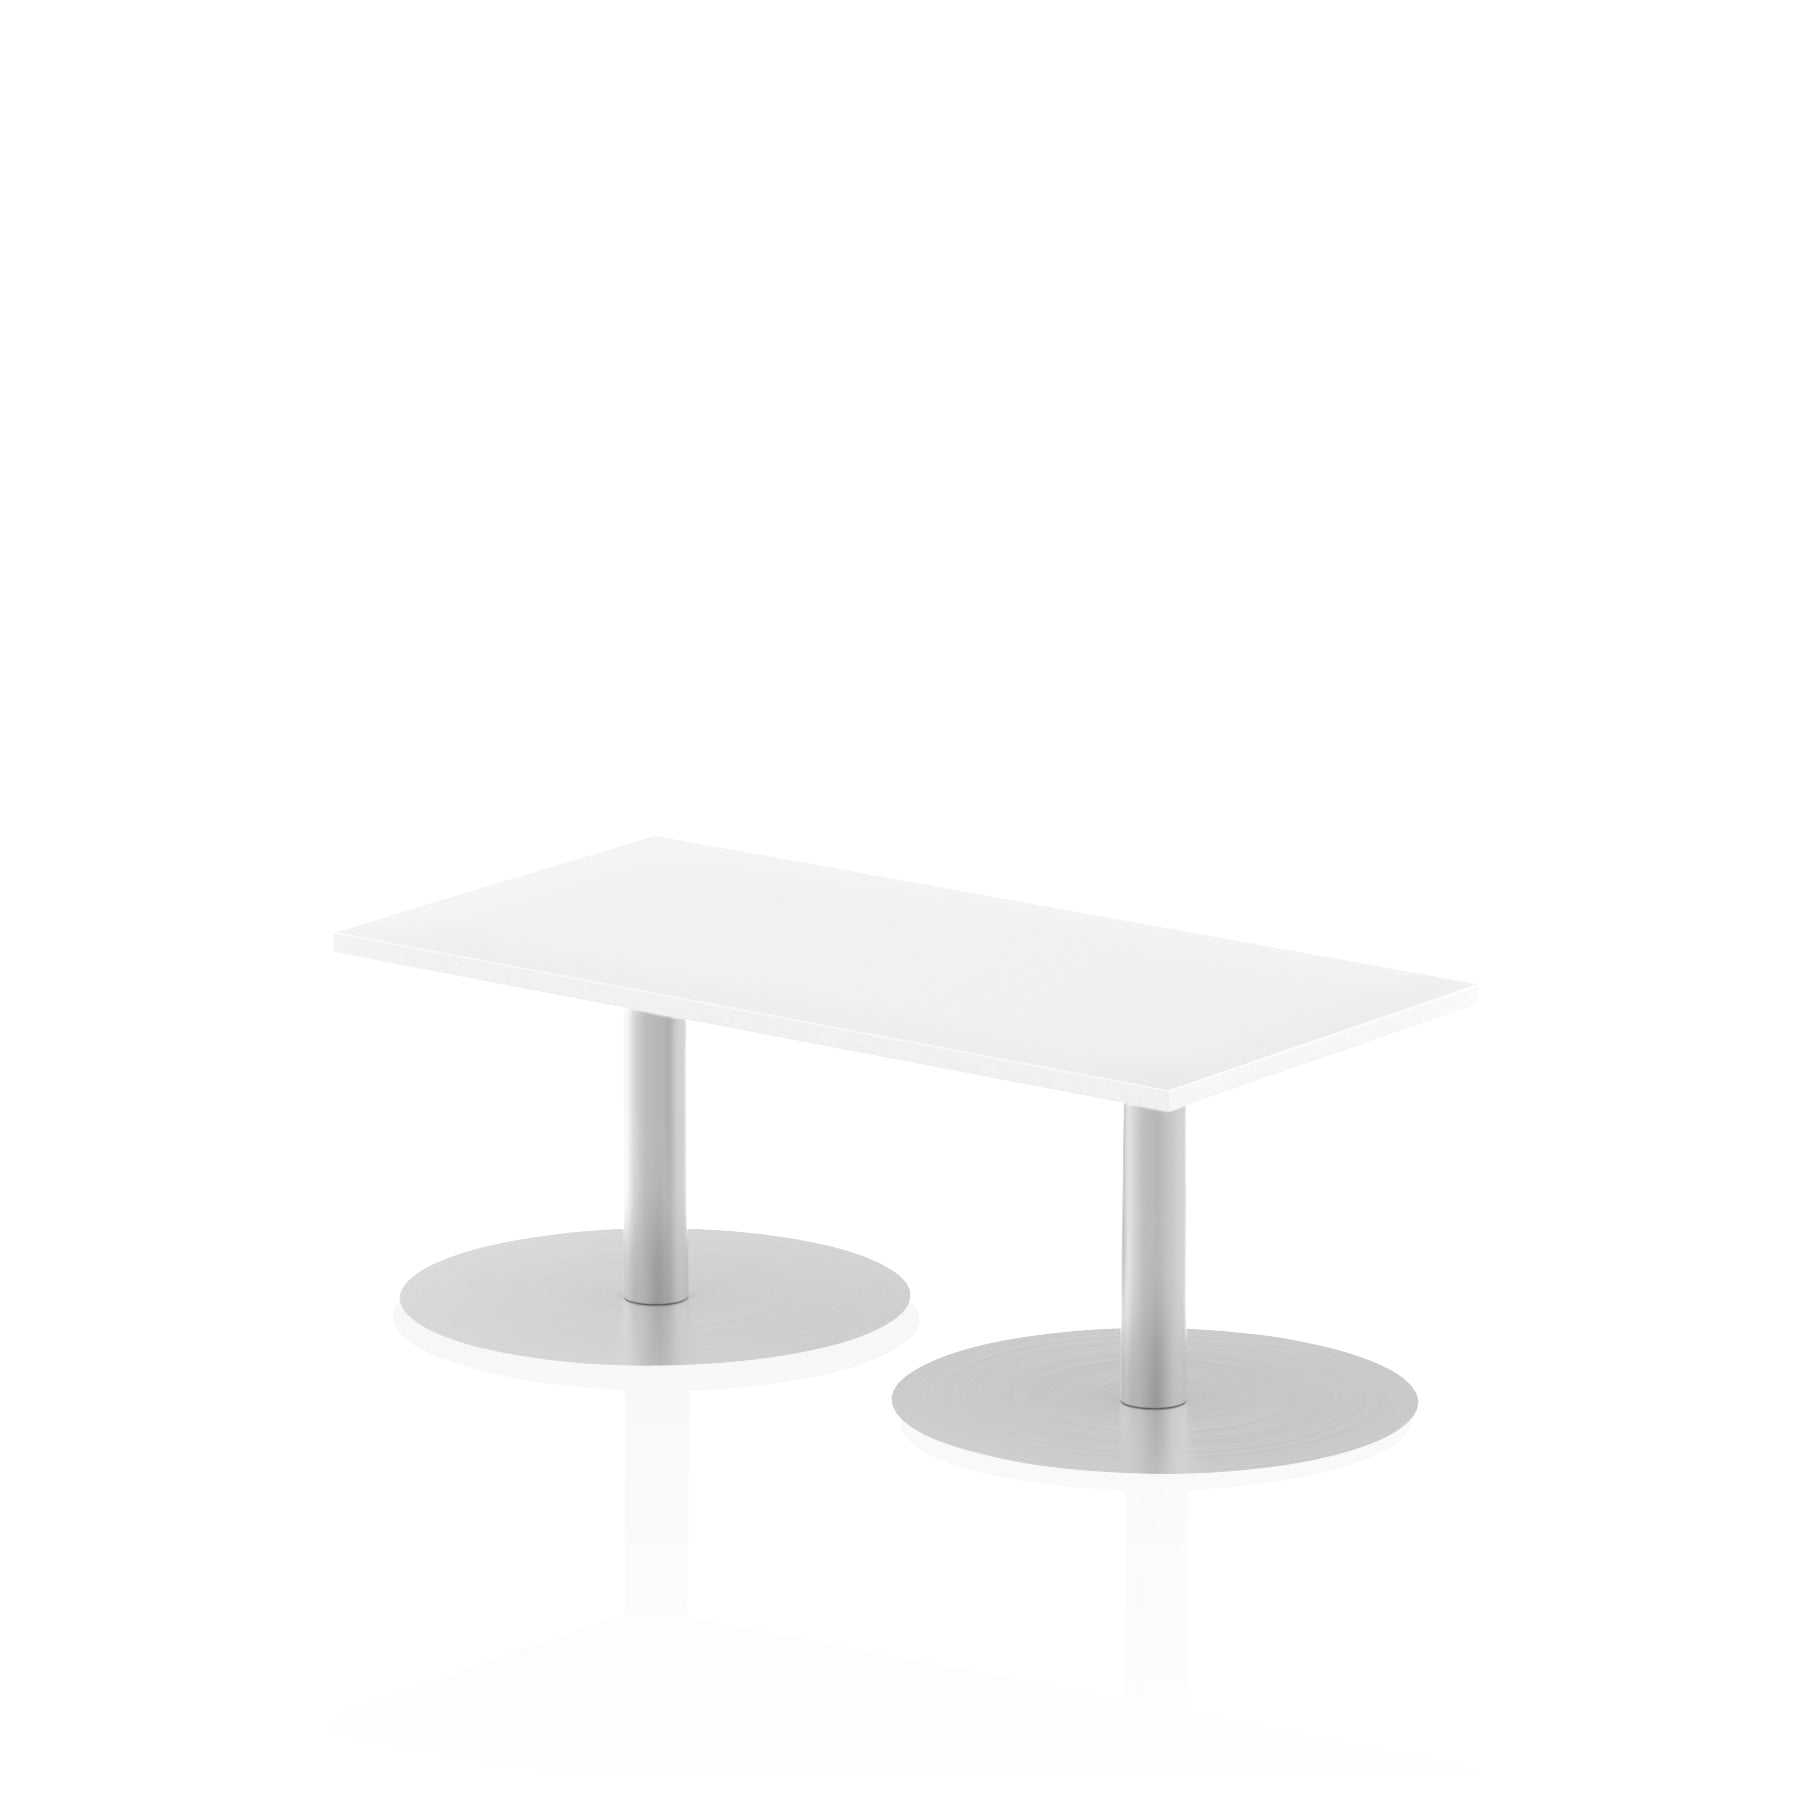 Italia Slimline Rectangular Poseur Table - 1200x600 MFC Top, Silver Bistro Legs, Self-Assembly, 5-Year Guarantee